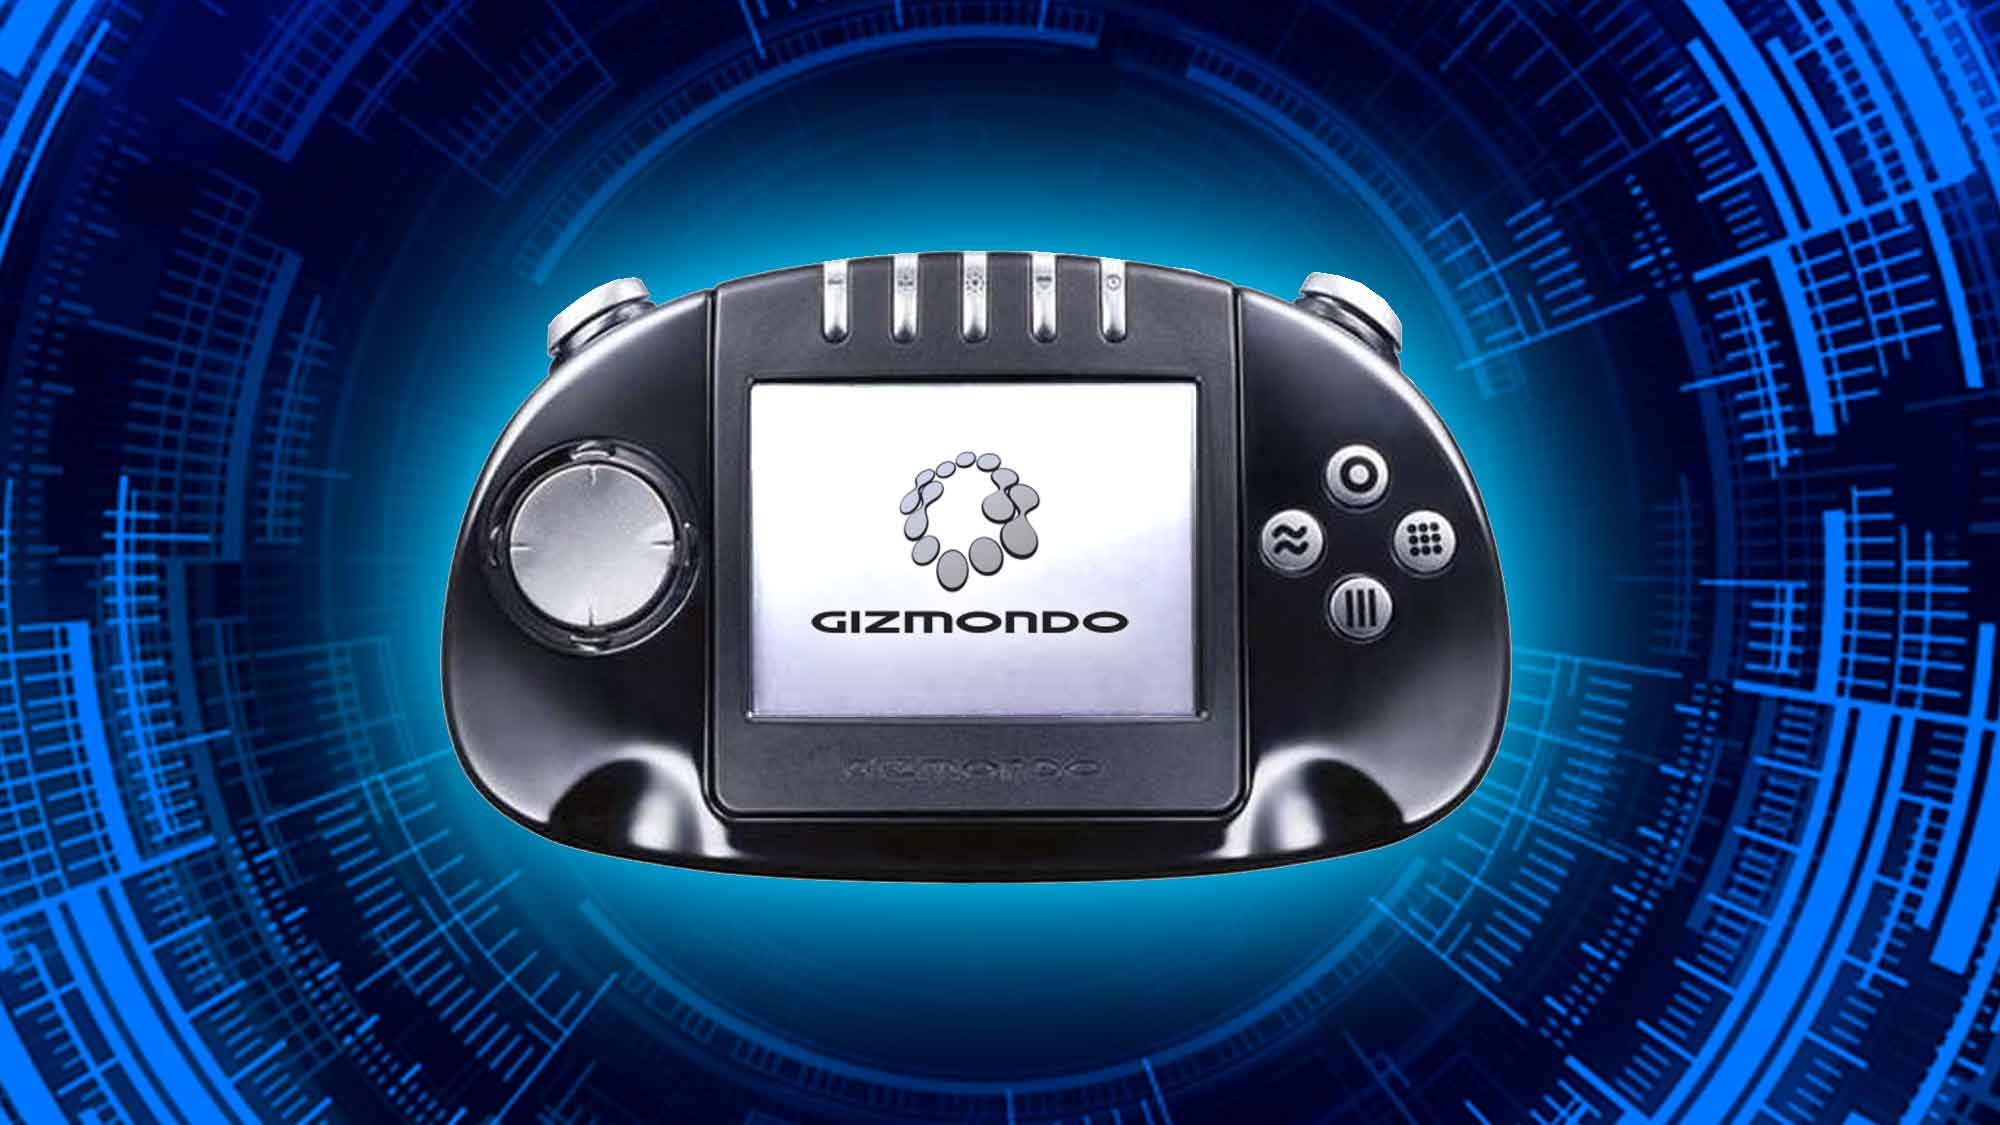 Gizmondo Gaming Device To Enable Location-Based Advertising (2005)